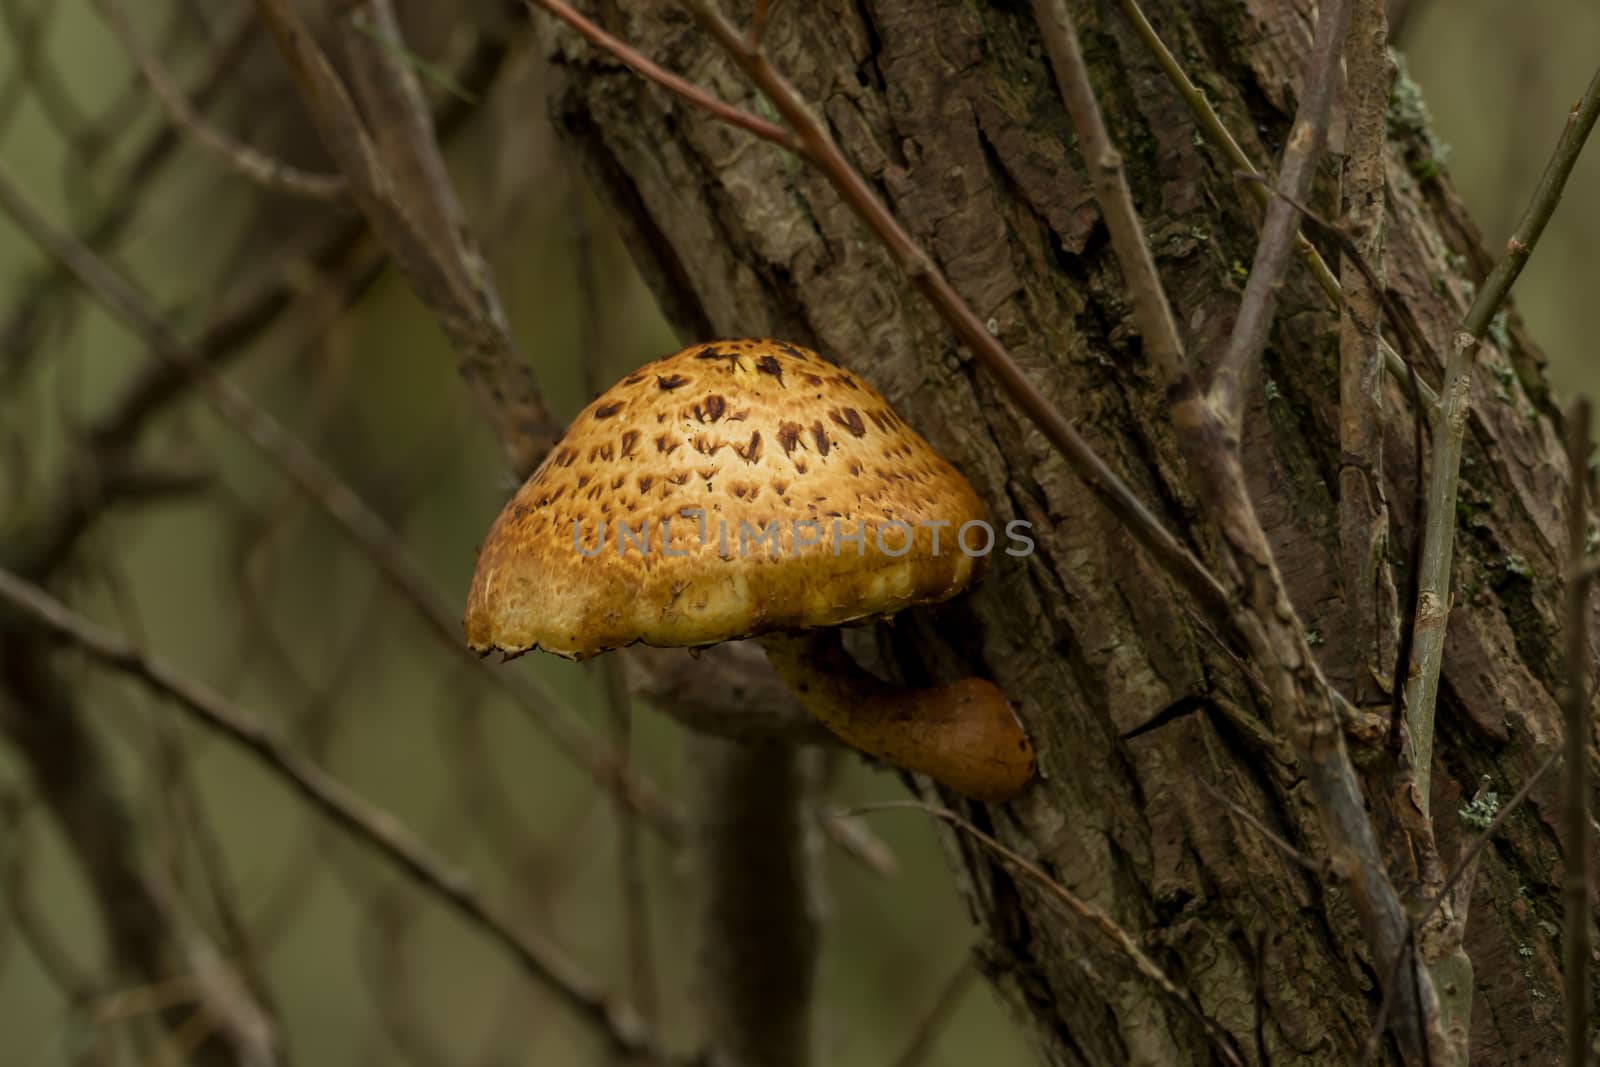 A beautiful mushroom on a tree